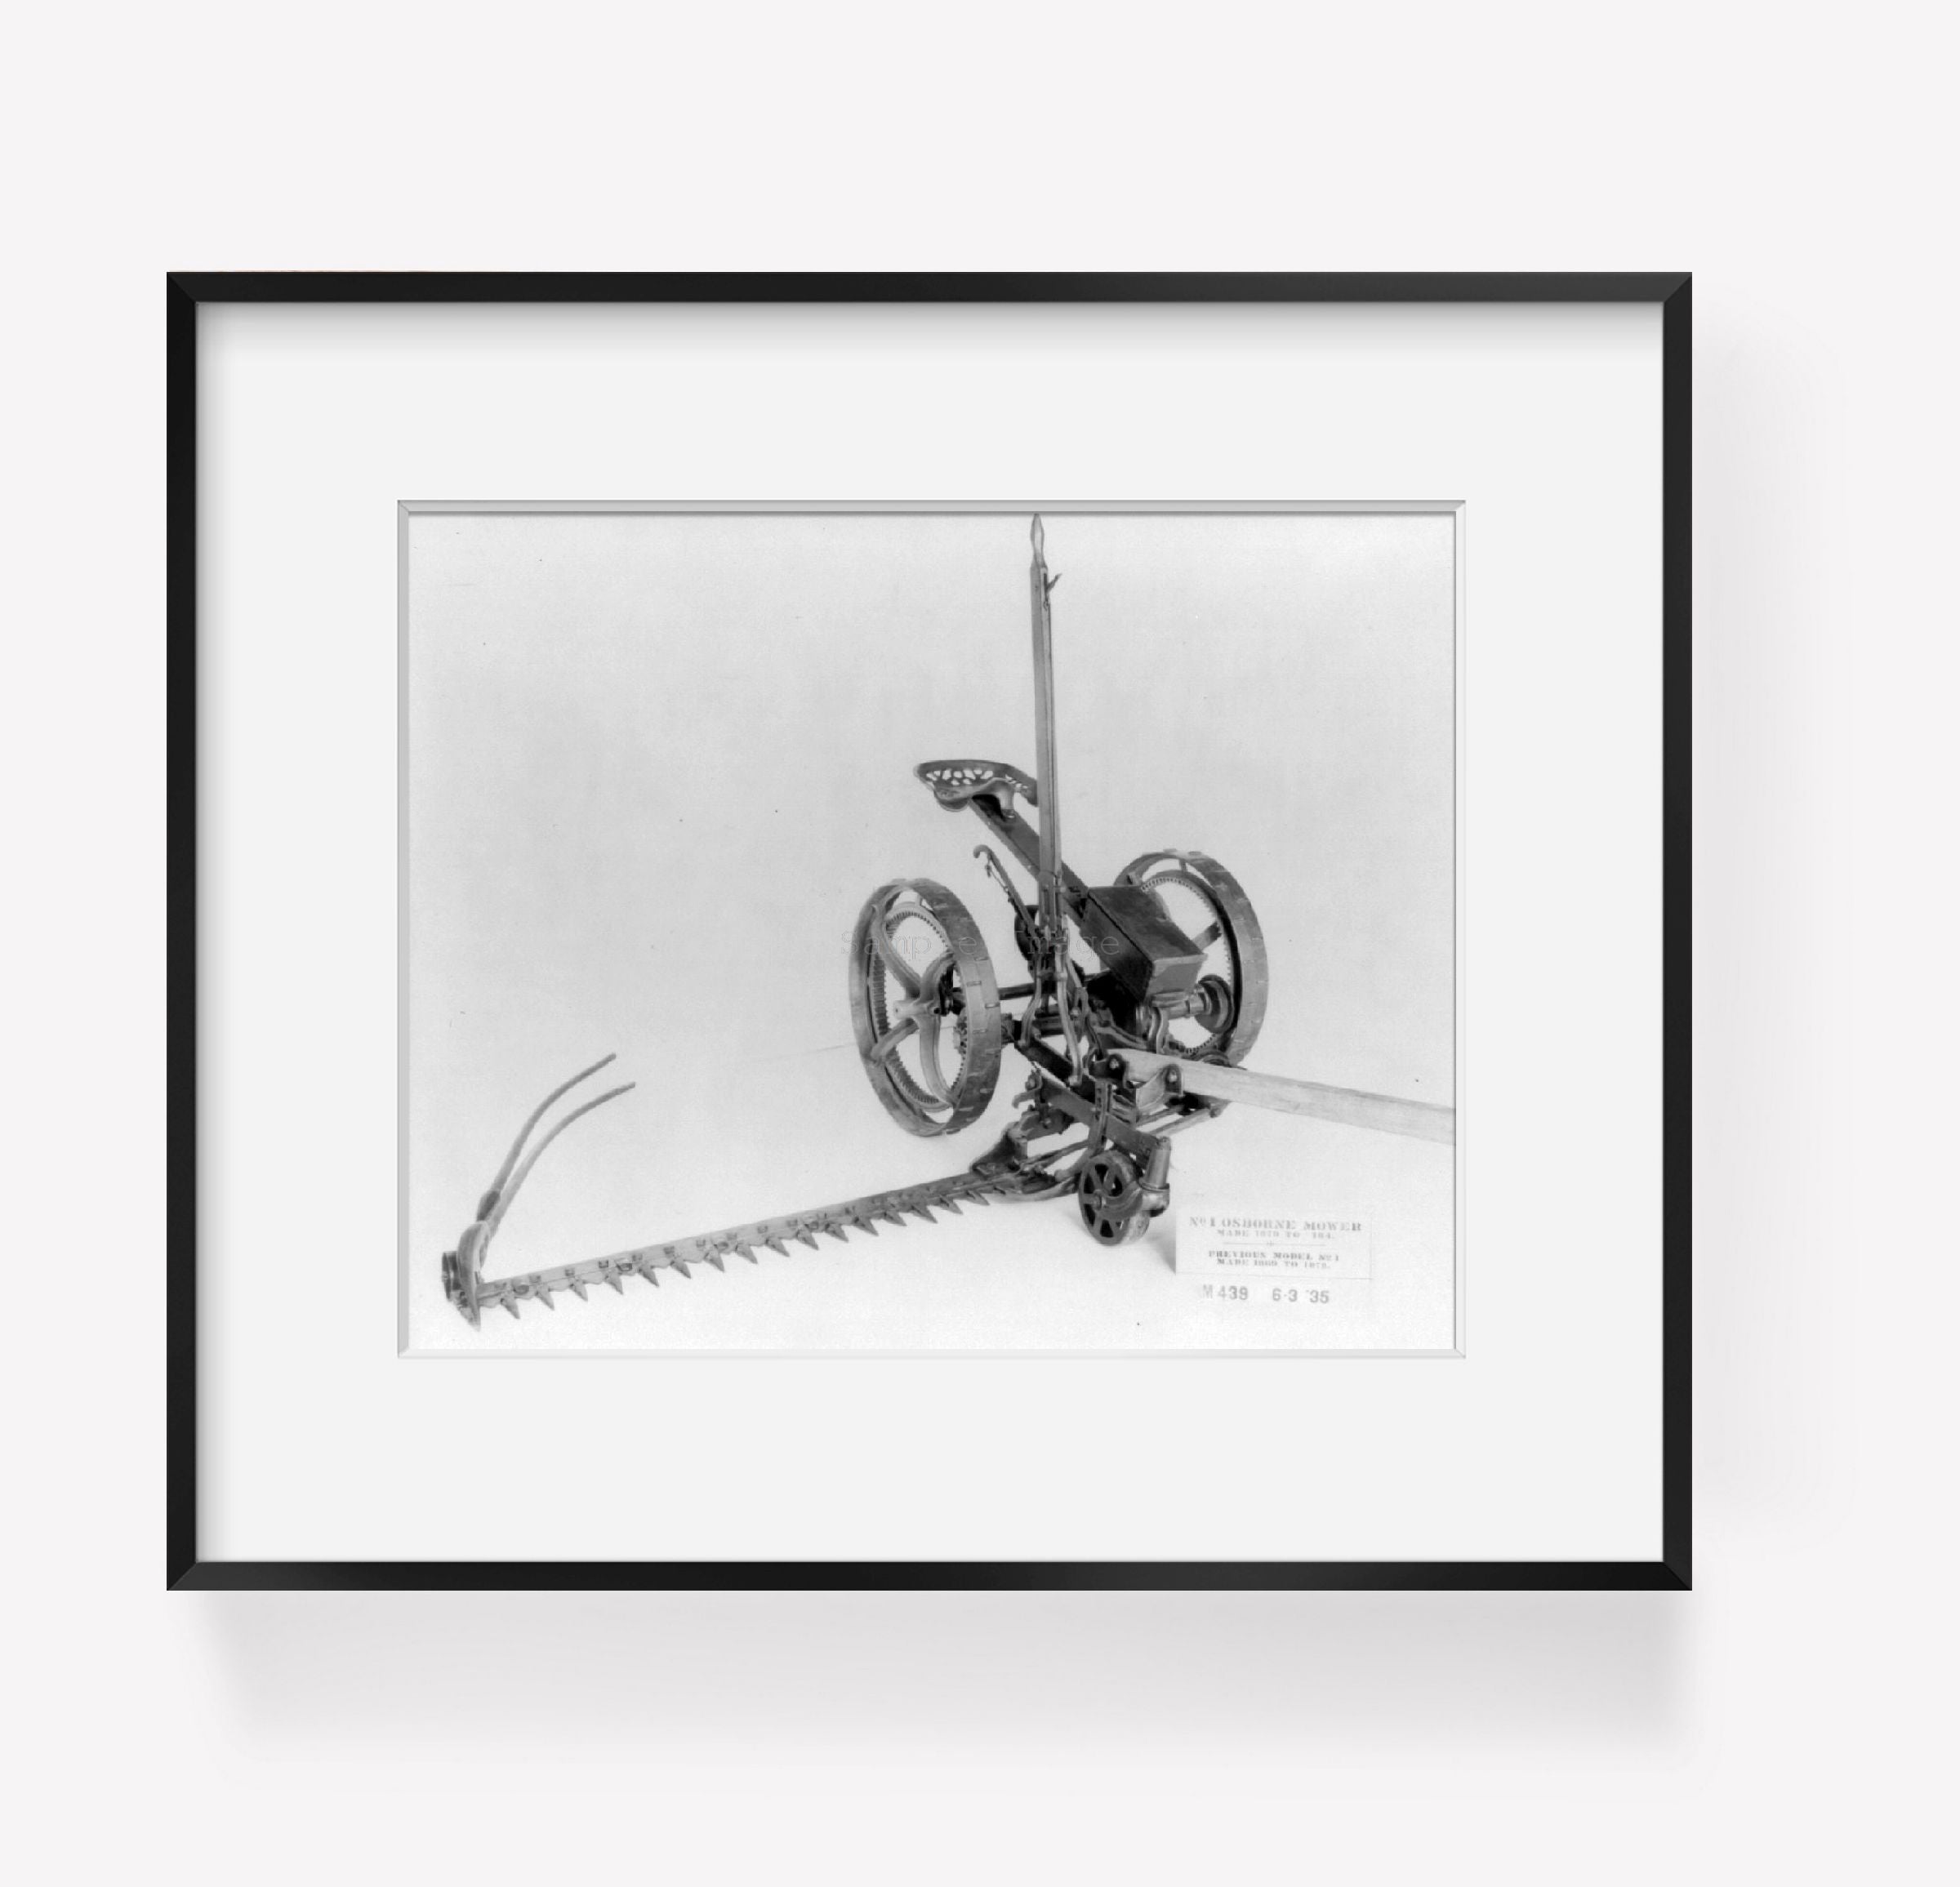 Photo: Mowing machine with mechanical cutter blades, Osborne Mower, made 1879-1884